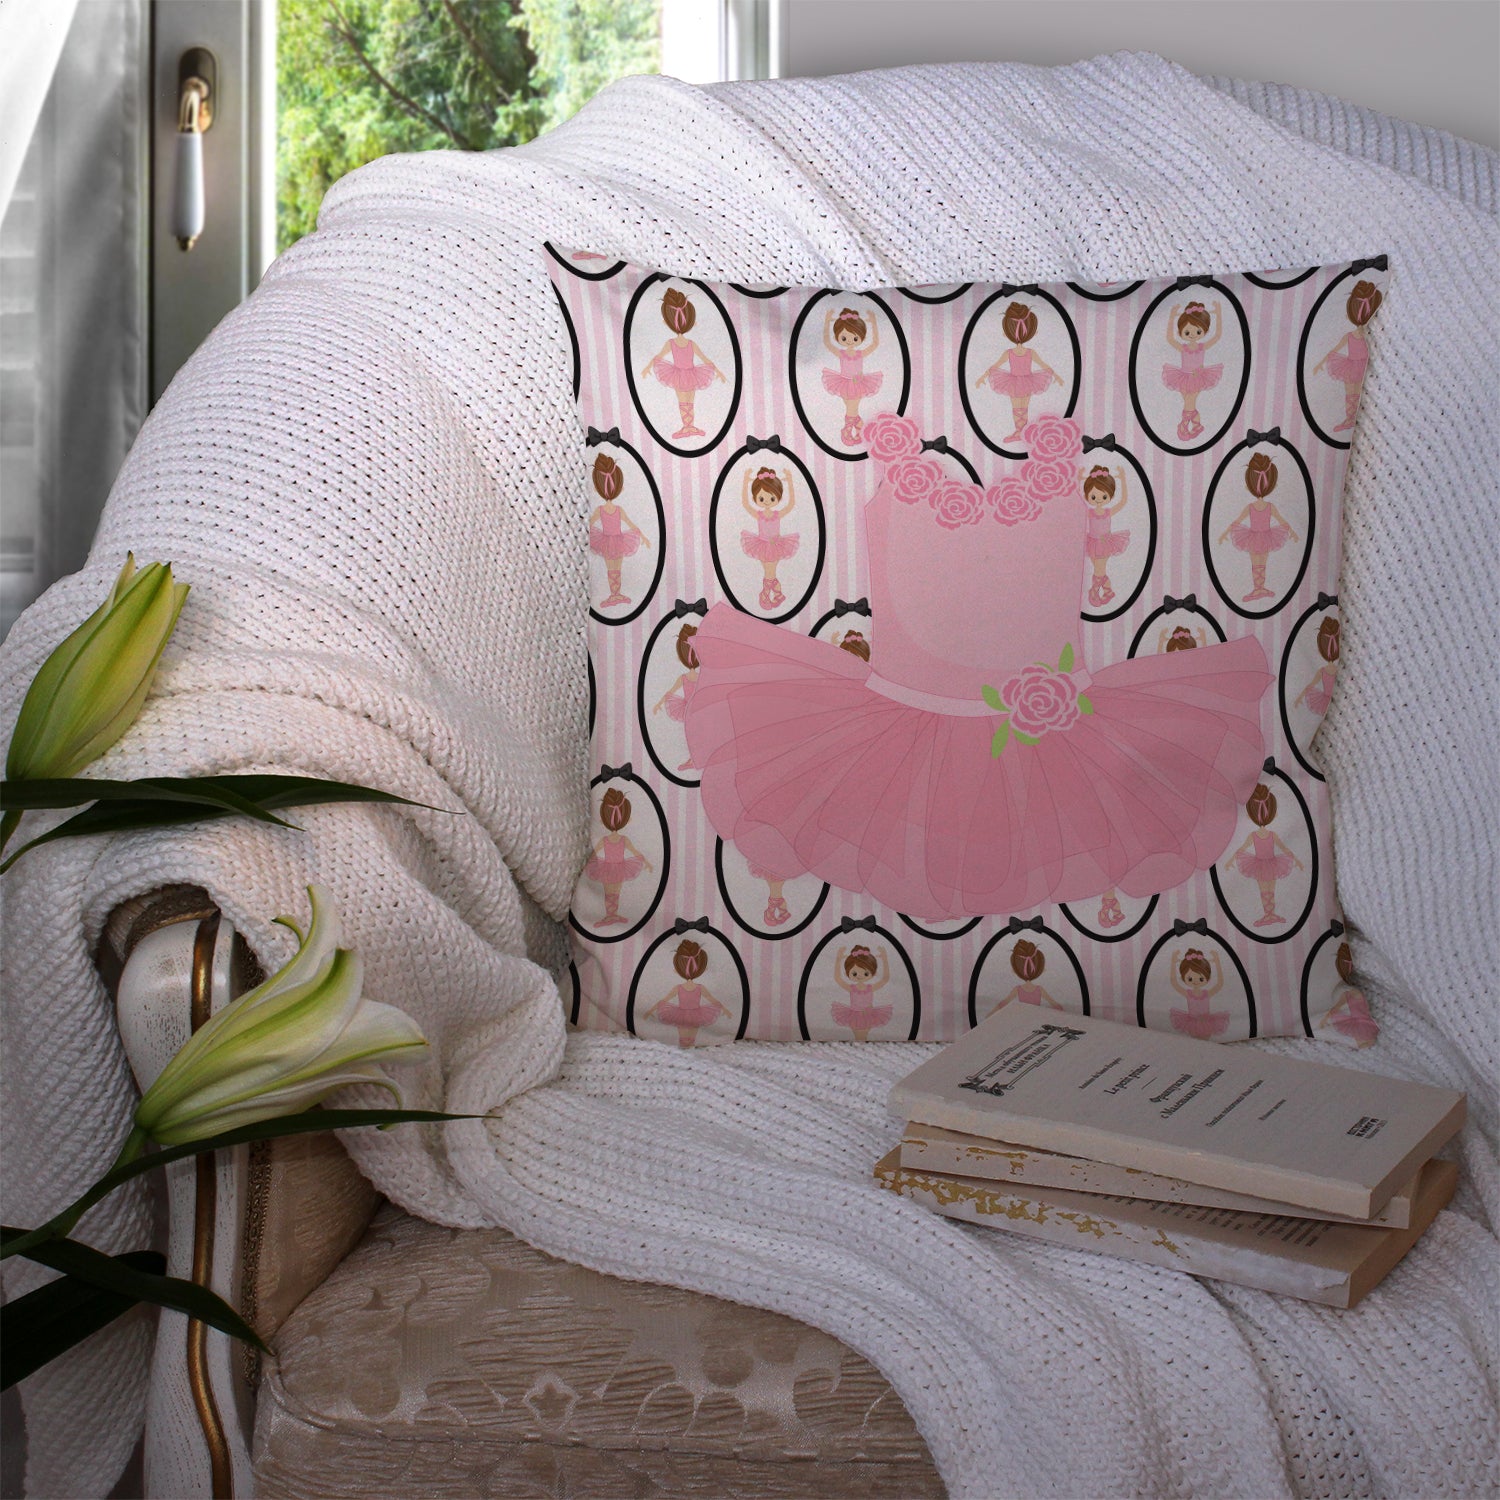 Ballerina Pink Tutu Fabric Decorative Pillow BB5153PW1414 - the-store.com